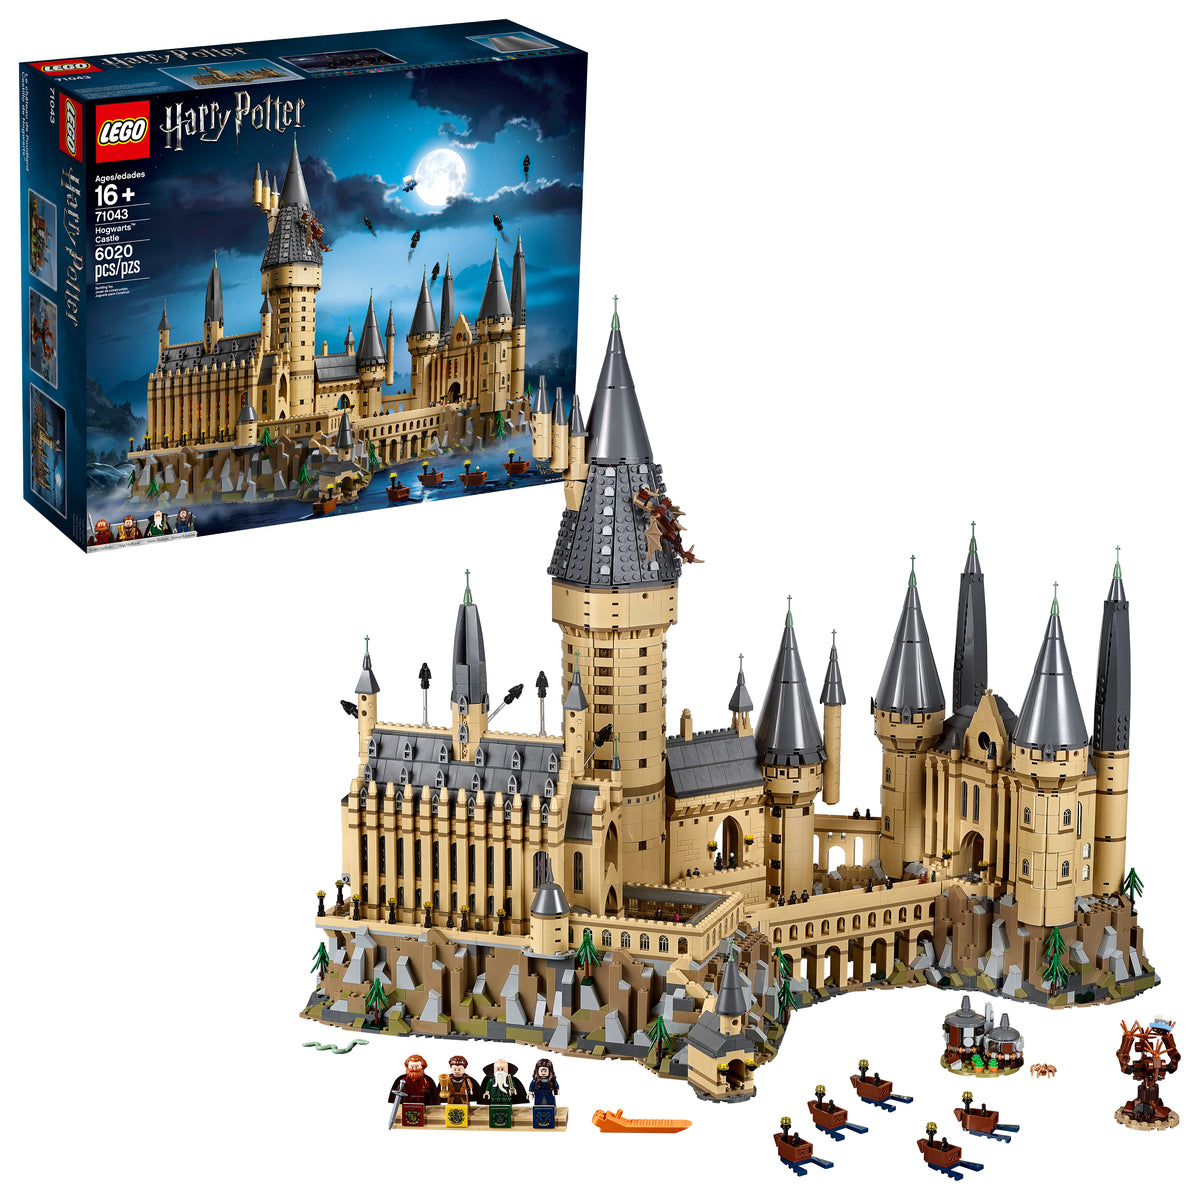 LEGO® Harry Potter™ Dobby™ the House-Elf - 76421 – LEGOLAND New York Resort